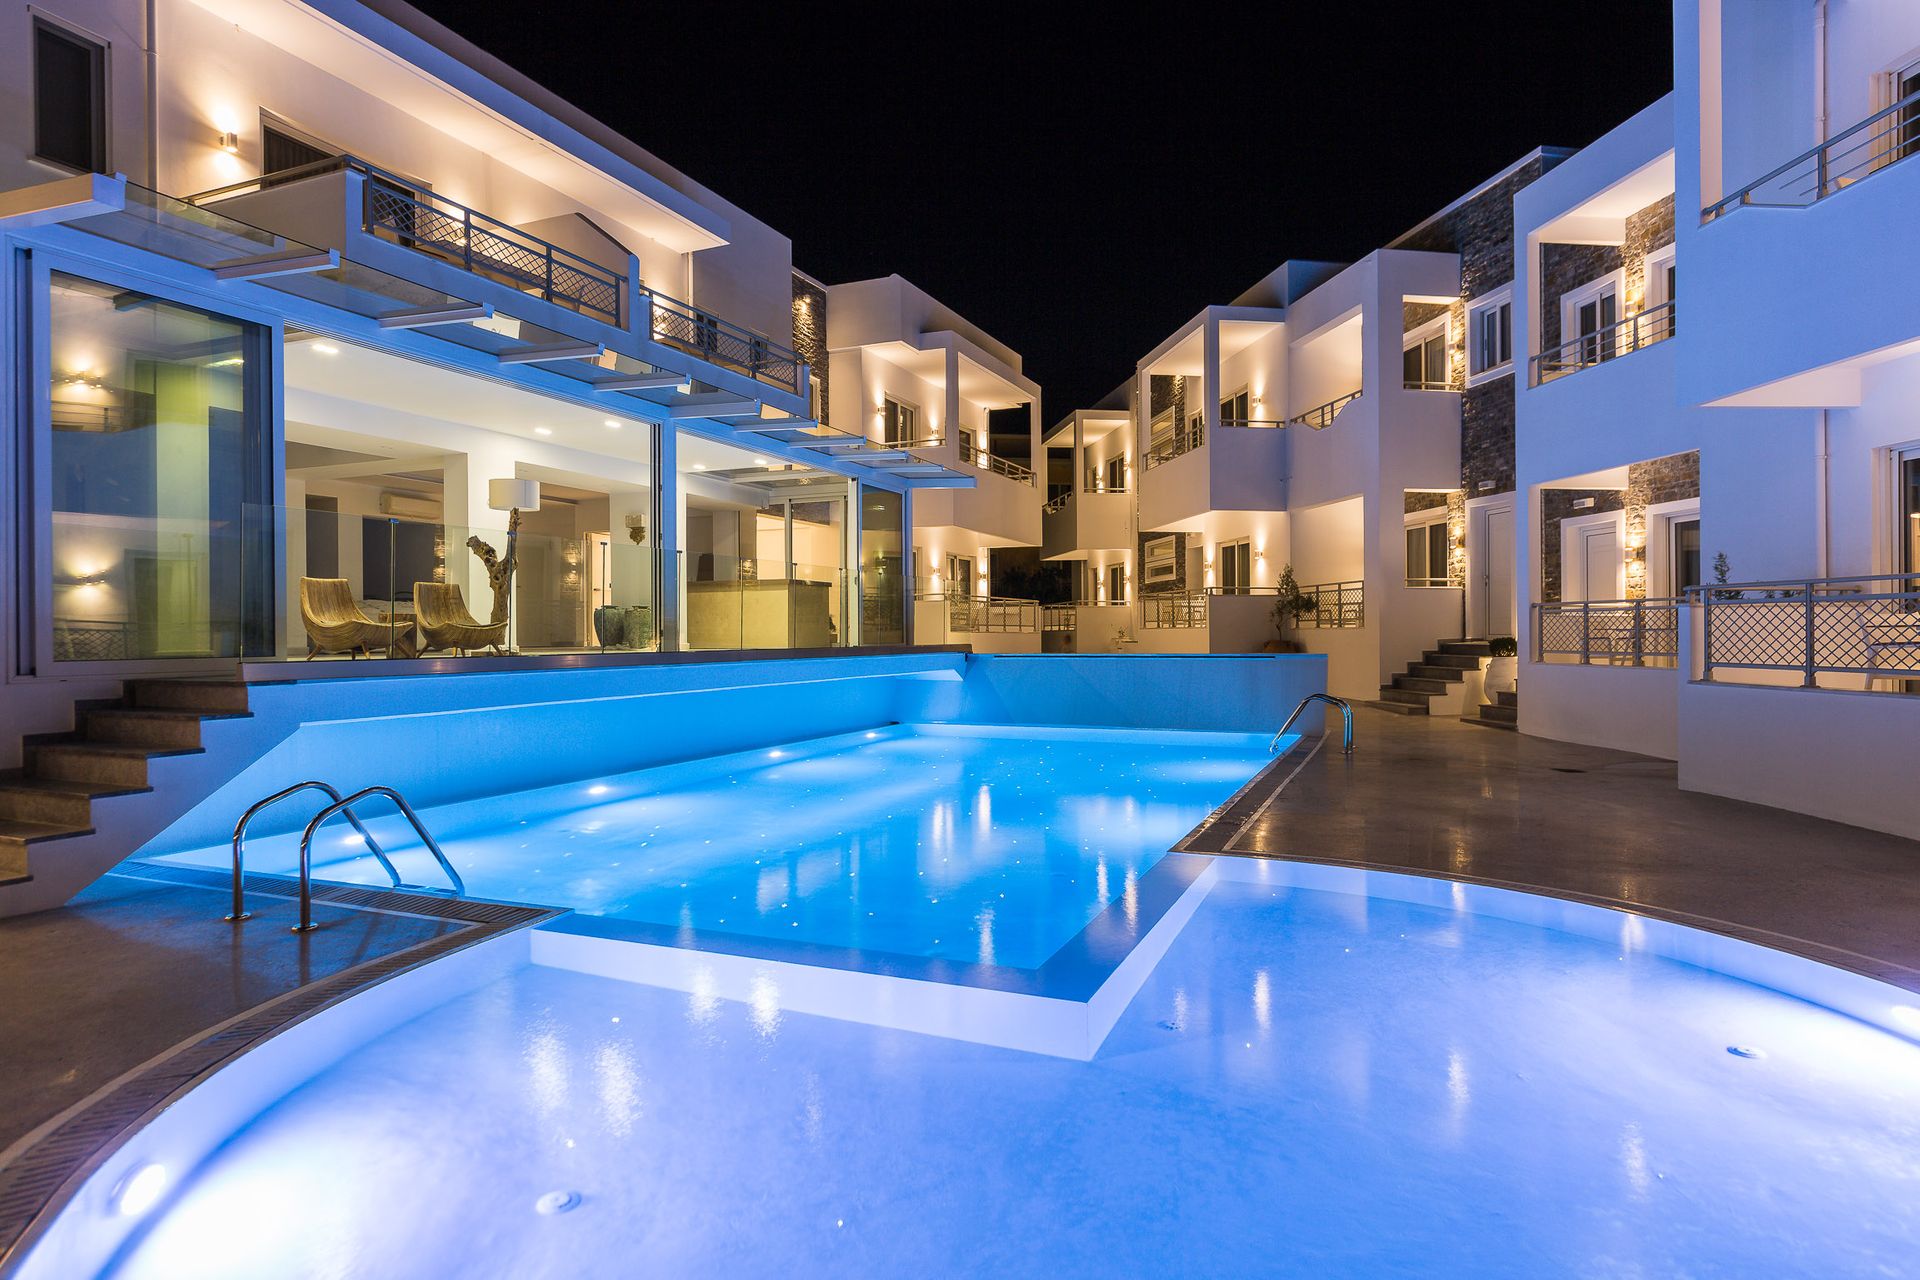 4* Cyano Hotel - Πλακιάς, Κρήτη ✦ 4 Ημέρες (3 Διανυκτερεύσεις) ✦ 2 άτομα ✦ 2 ✦ 01/05/2022 έως 30/09/2022 ✦ Κοντά σε παραλία!